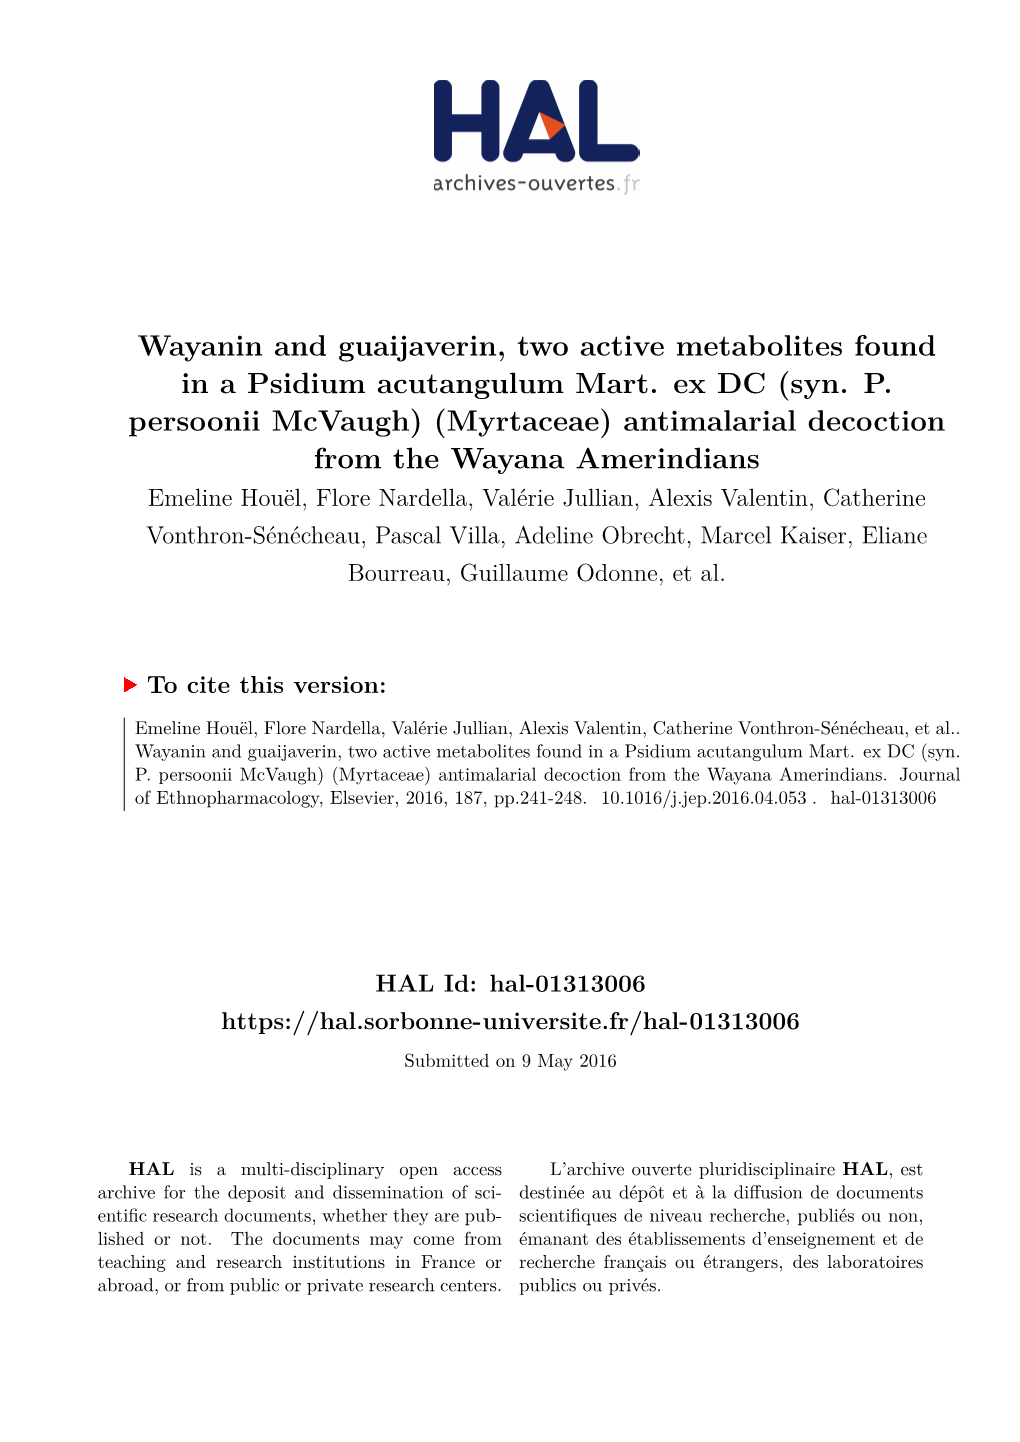 Wayanin and Guaijaverin, Two Active Metabolites Found in a Psidium Acutangulum Mart